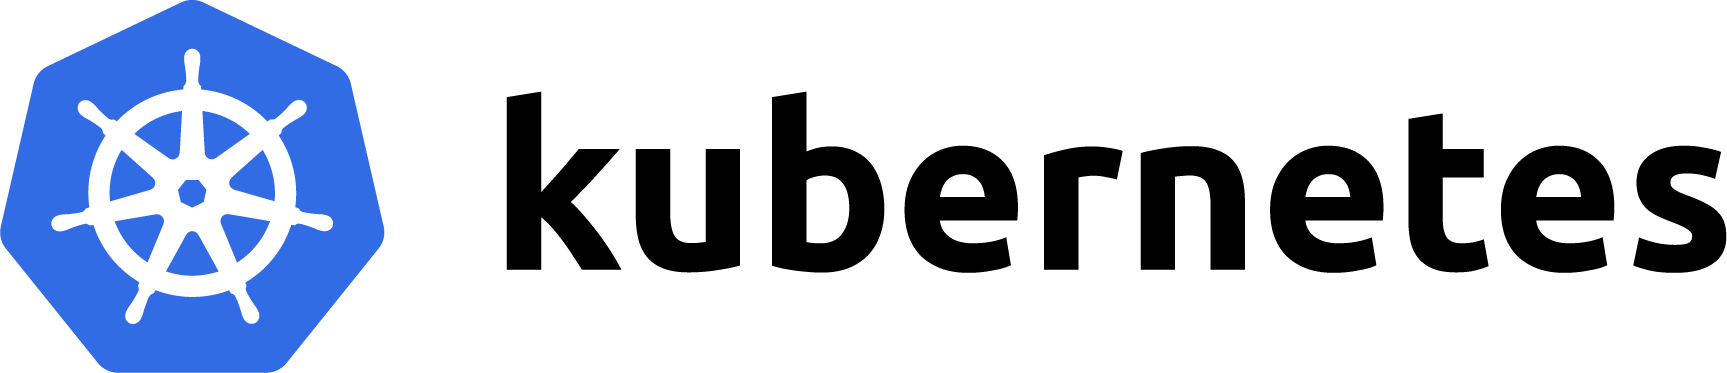 Kubernets Logo PNG - 178232